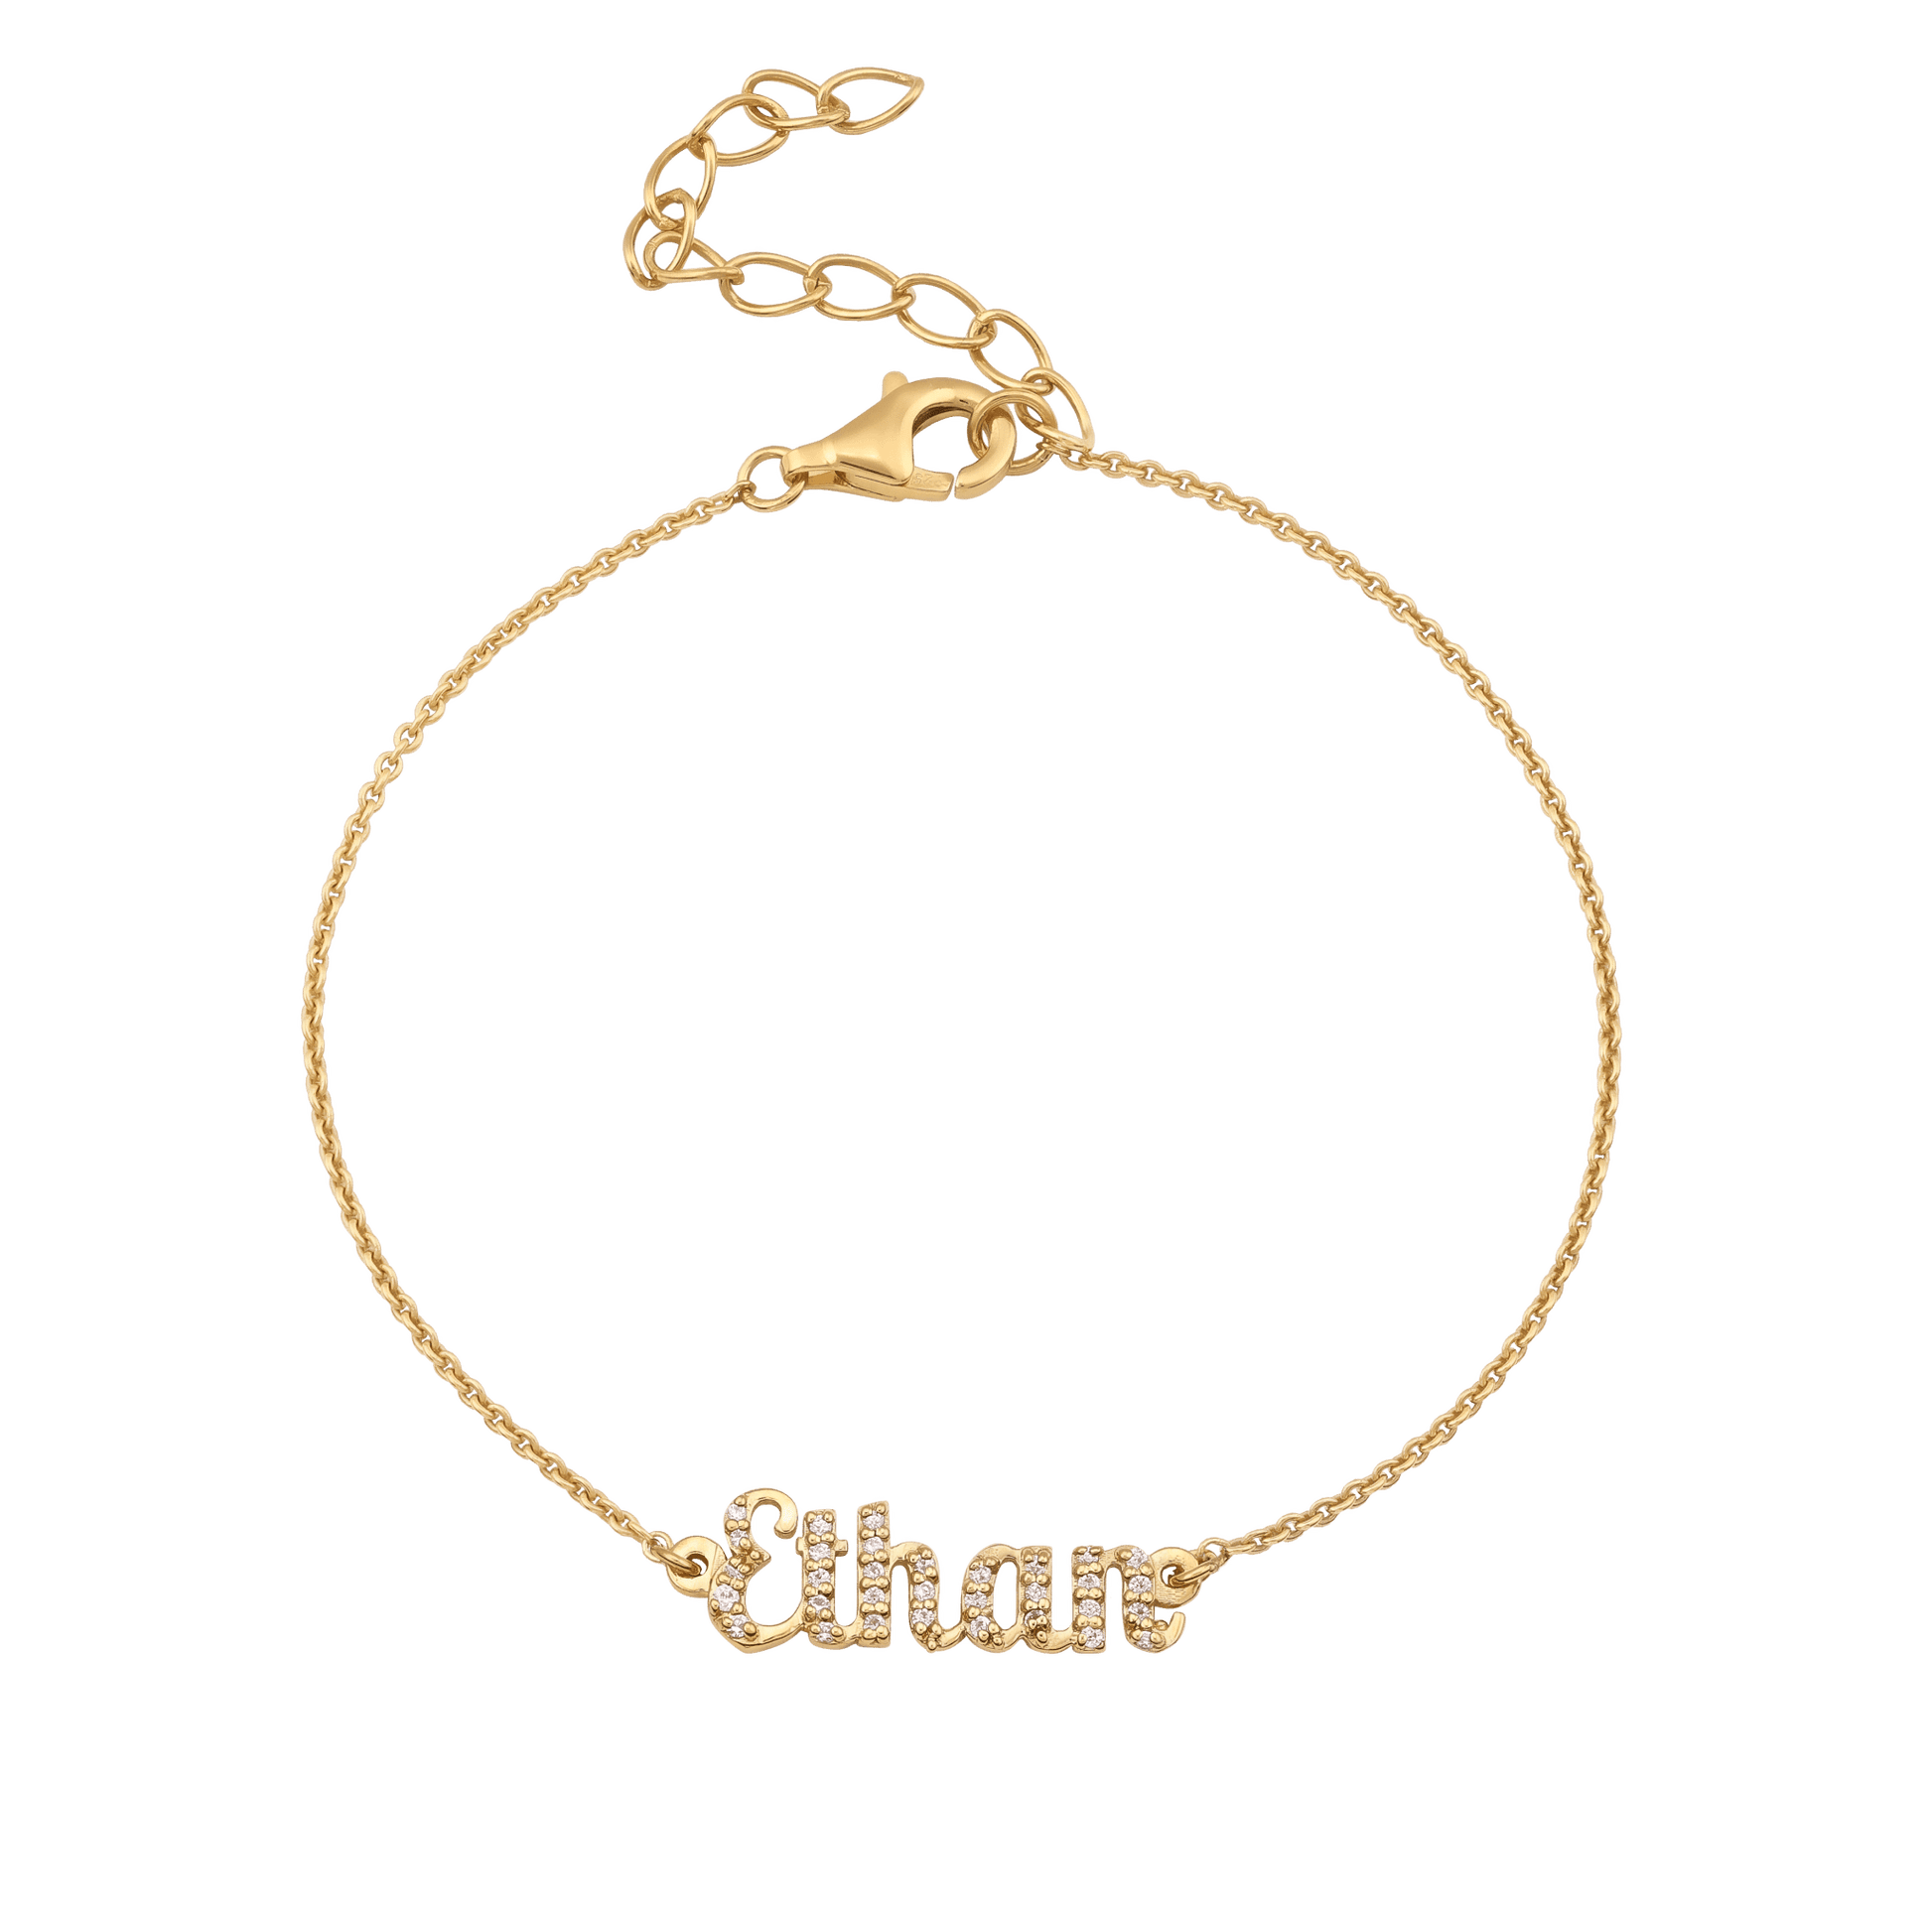 Signature Name Bracelet - 18K Gold Vermeil Bracelet magal-dev Paved w/White Sapphire 6"+1.5" Extender (S-M) 